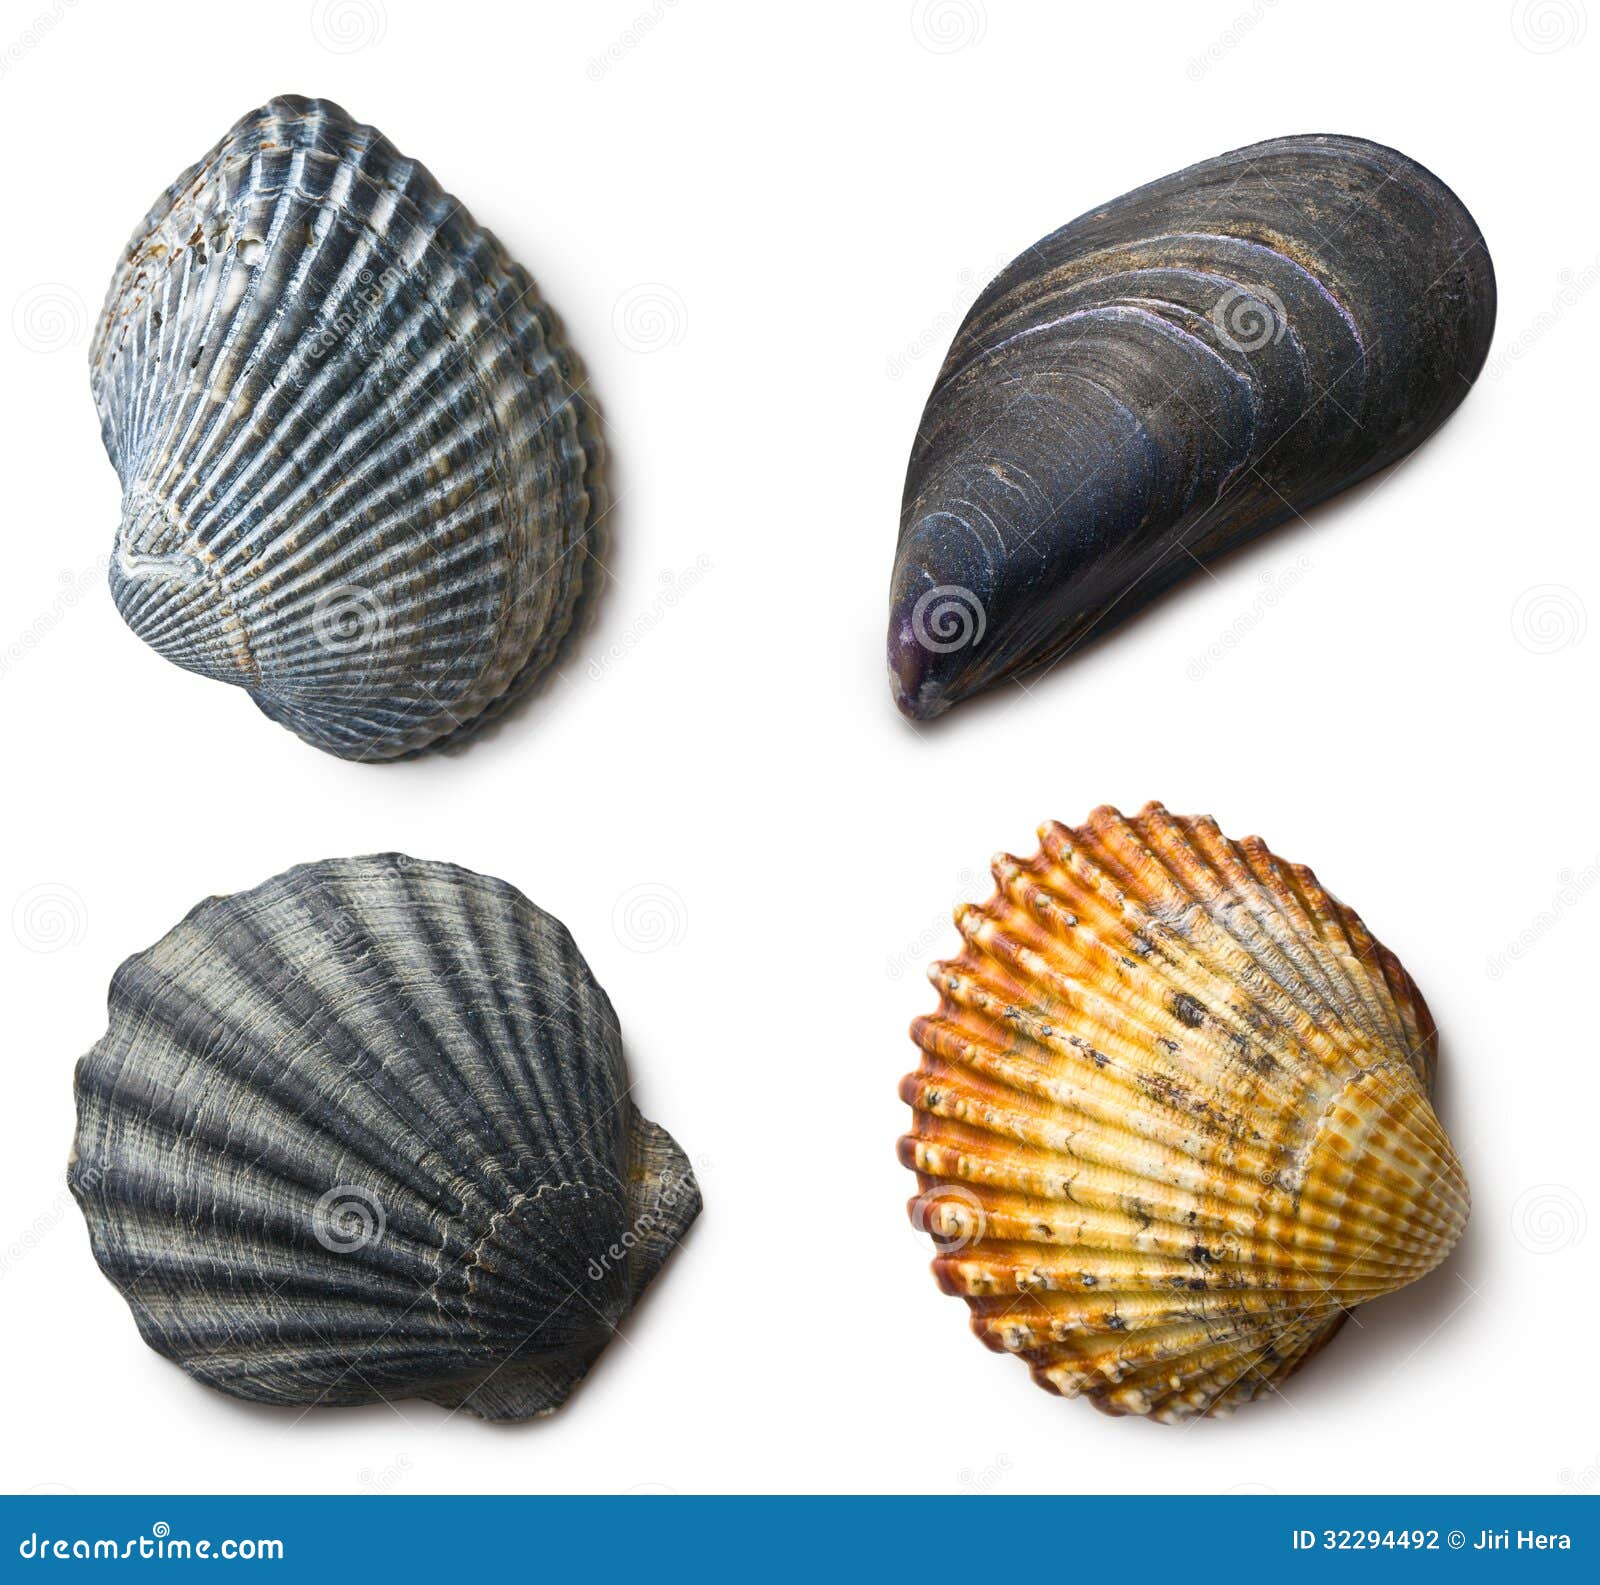 various sea shells on white background